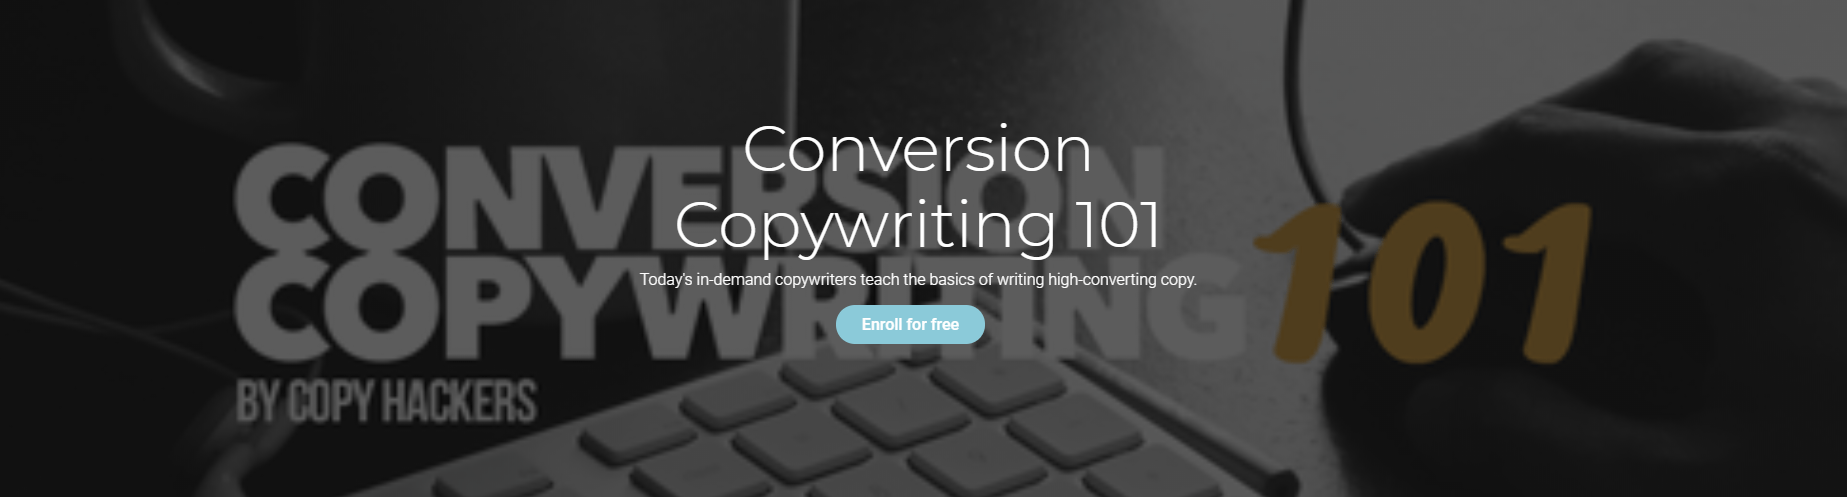 Conversion Copywriting 101 3